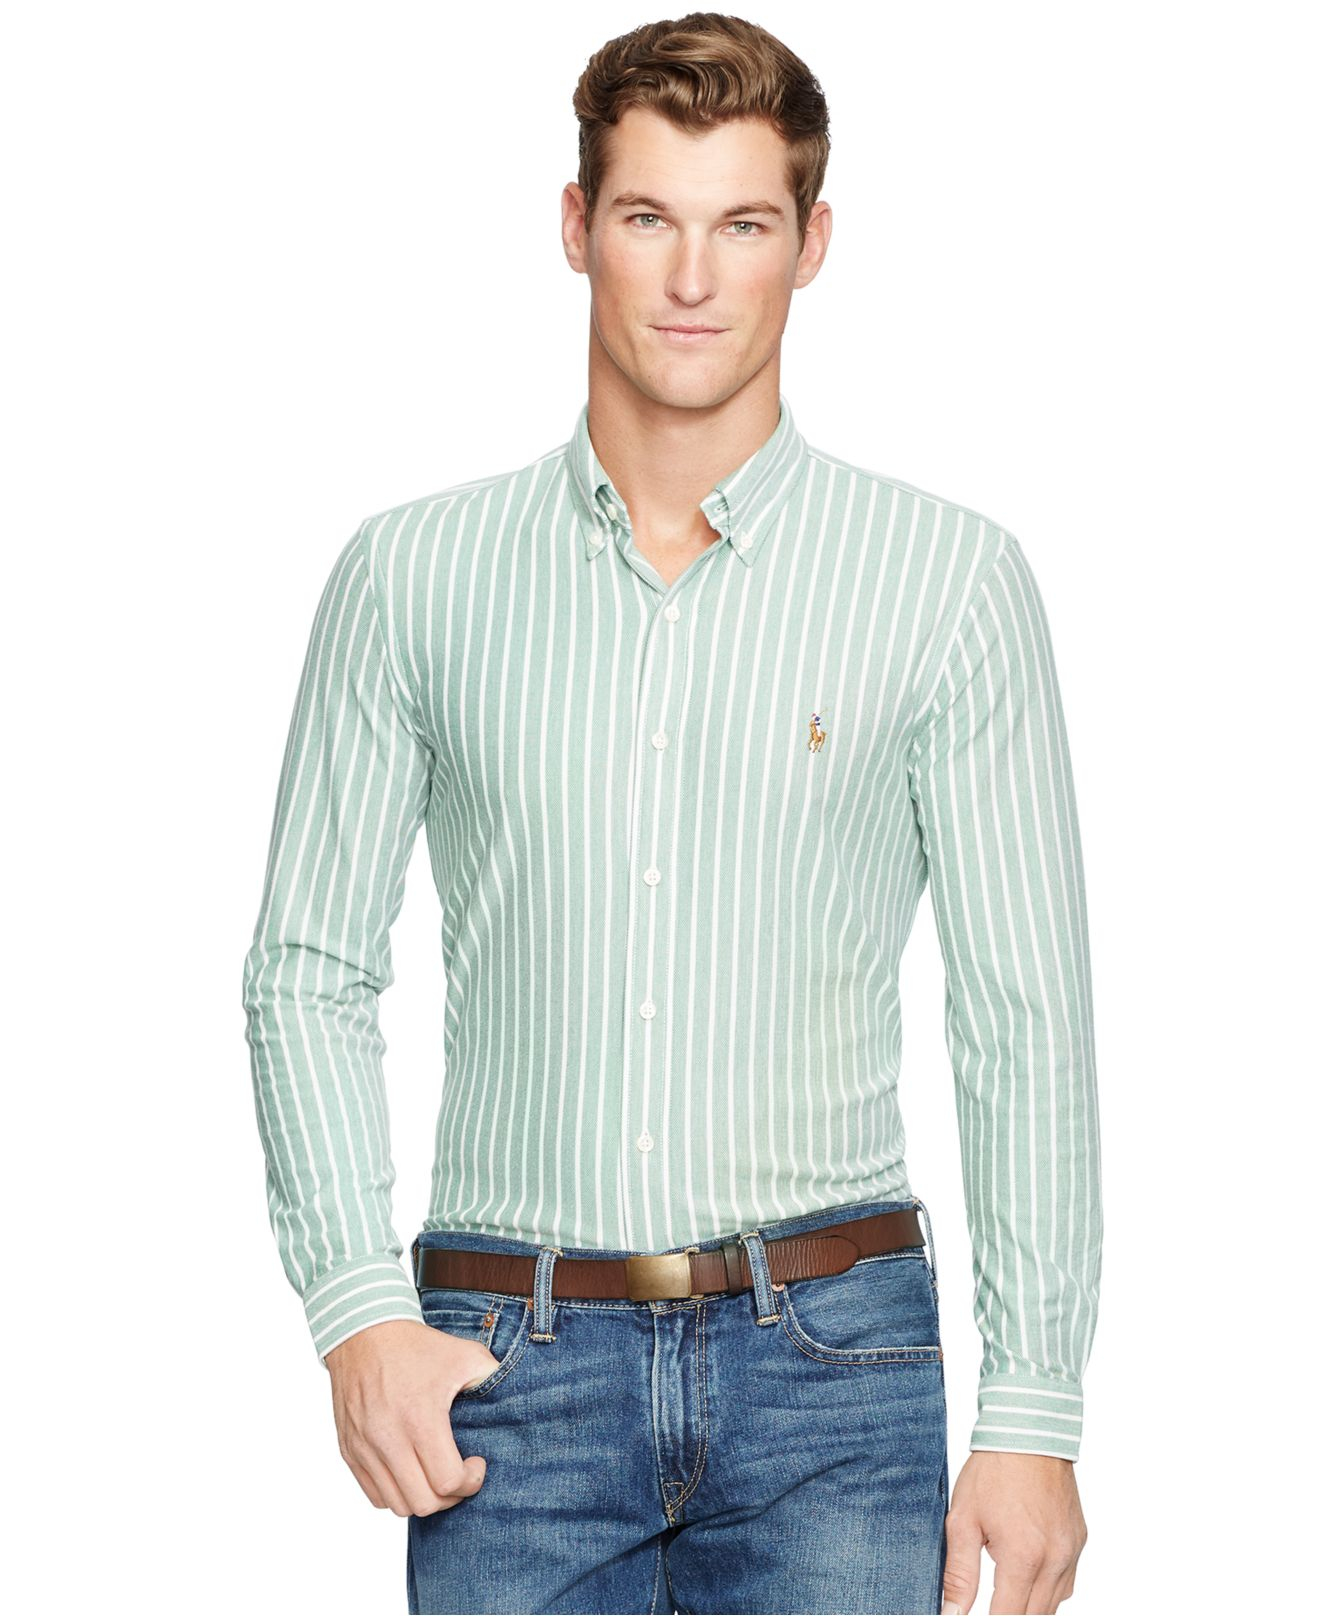 Lyst - Polo Ralph Lauren Striped Knit Oxford Shirt in Green for Men